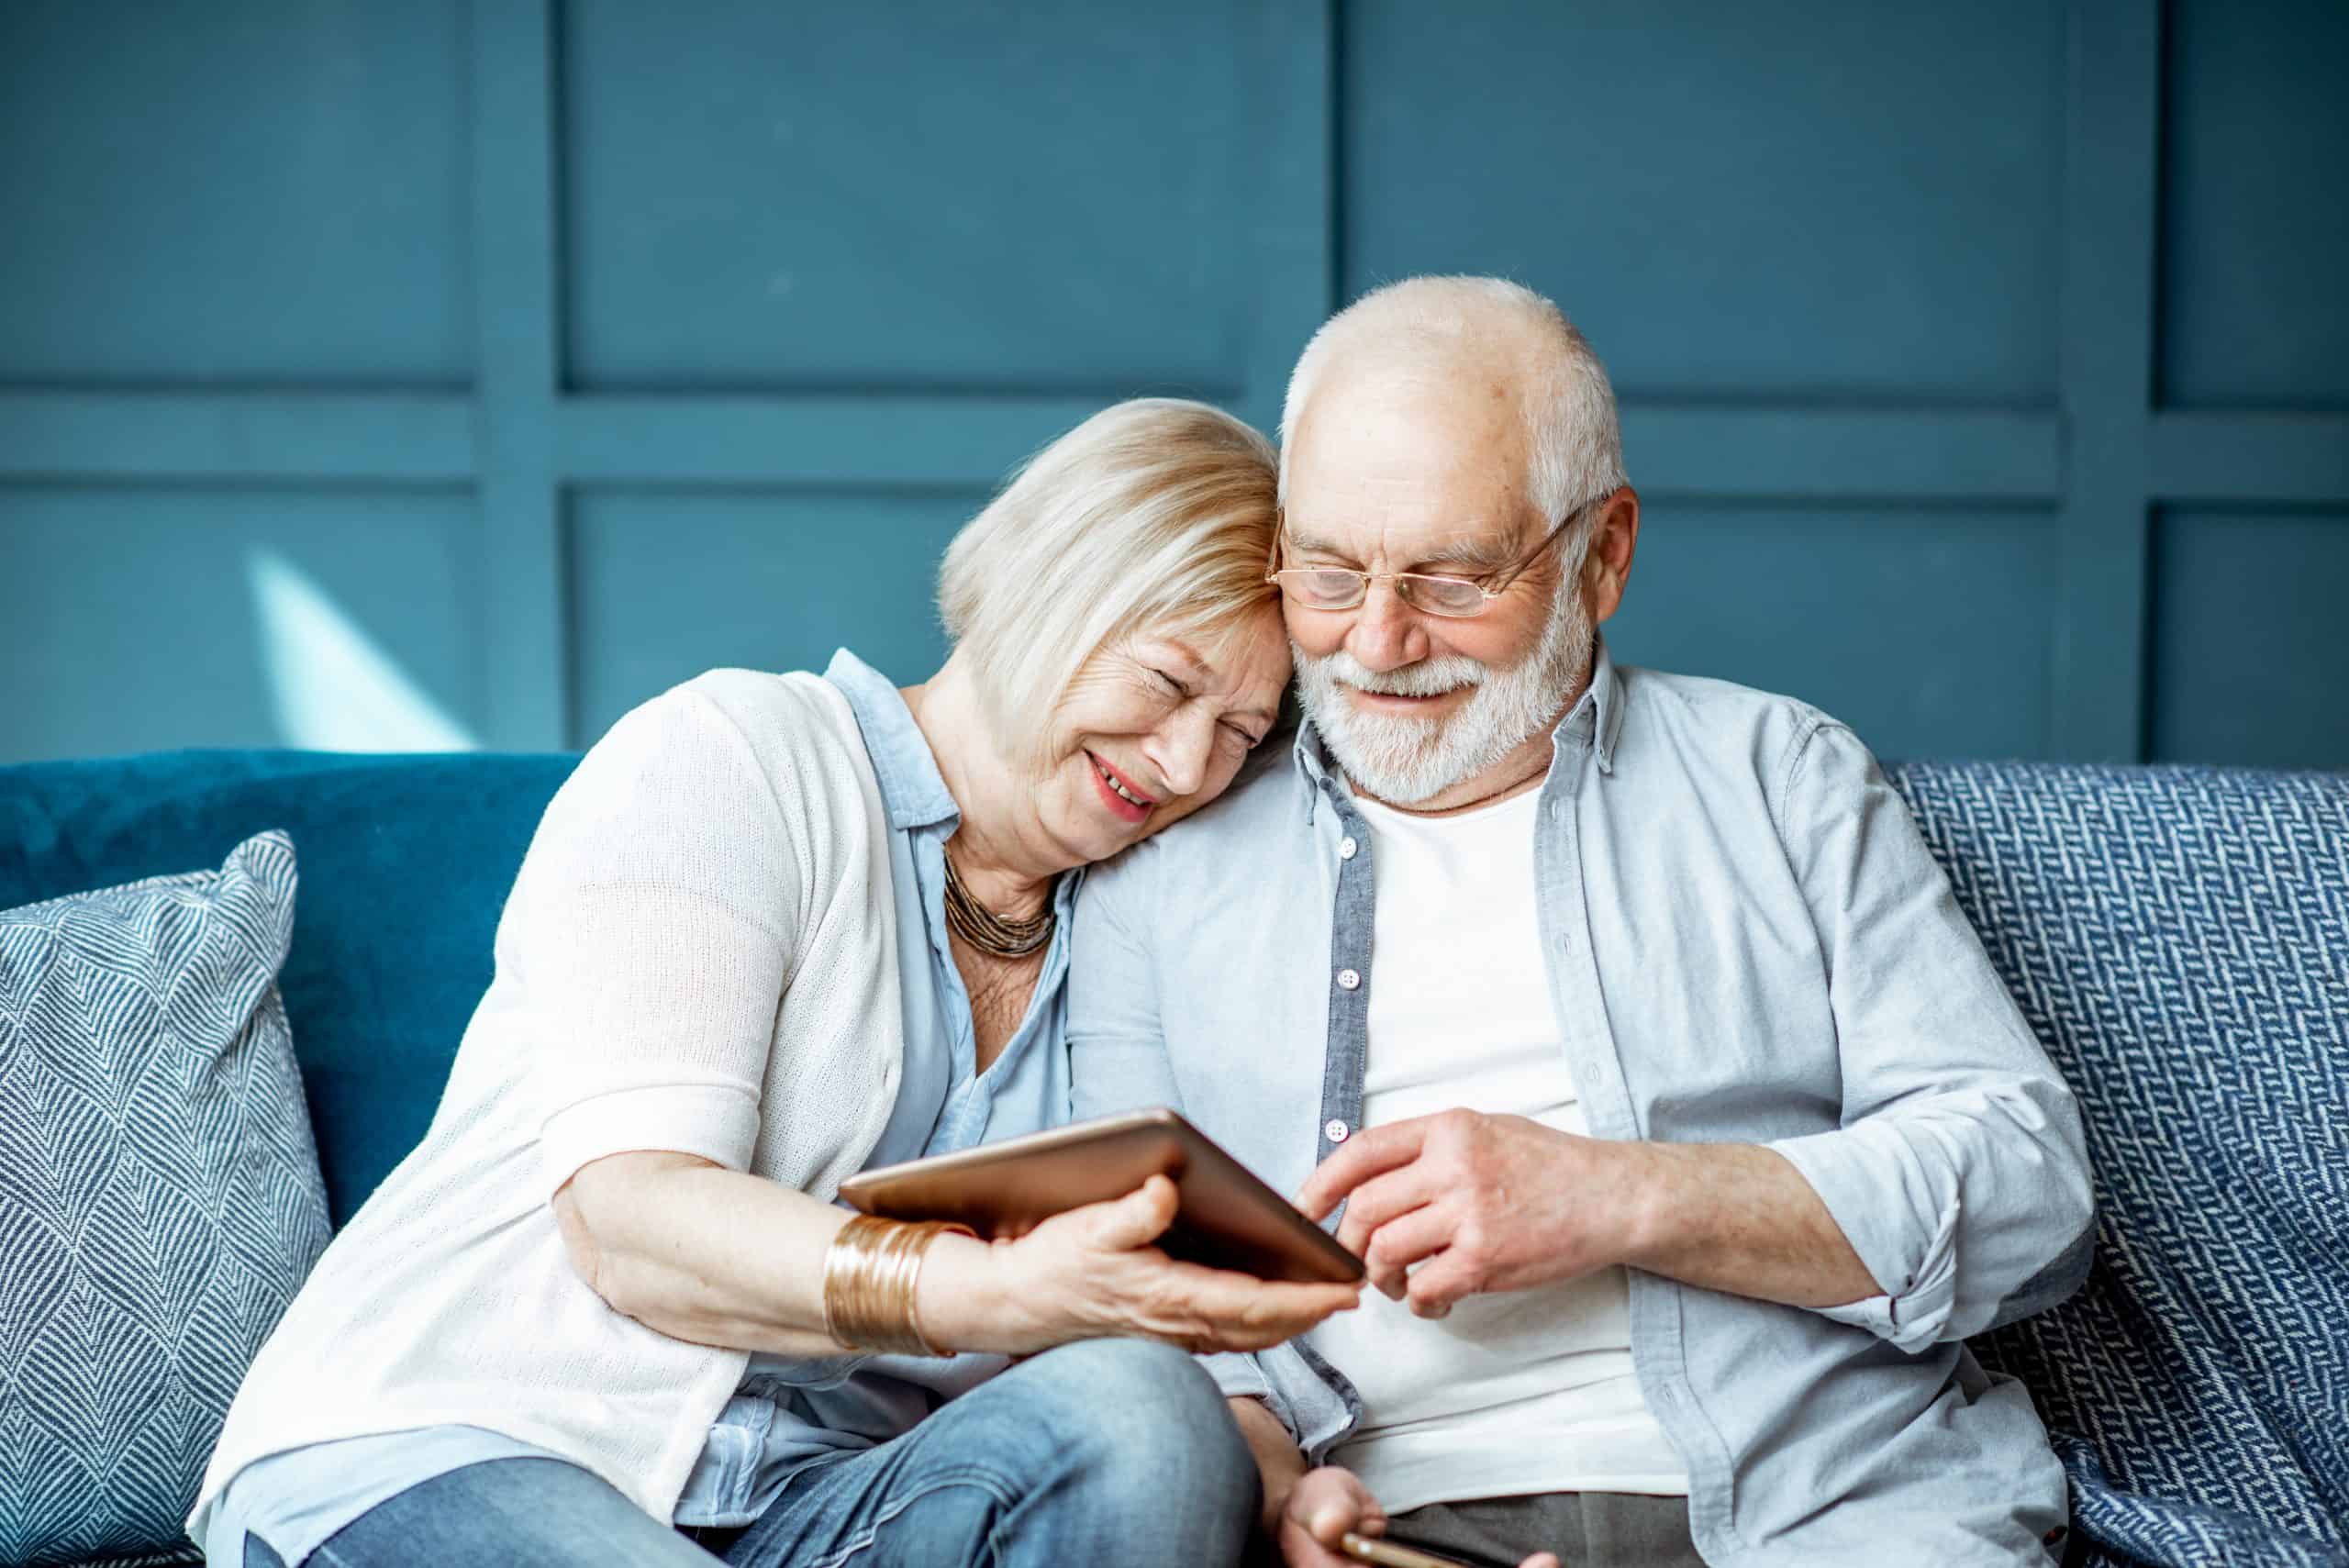 5 Downsizing Tips for Retirement Home Living